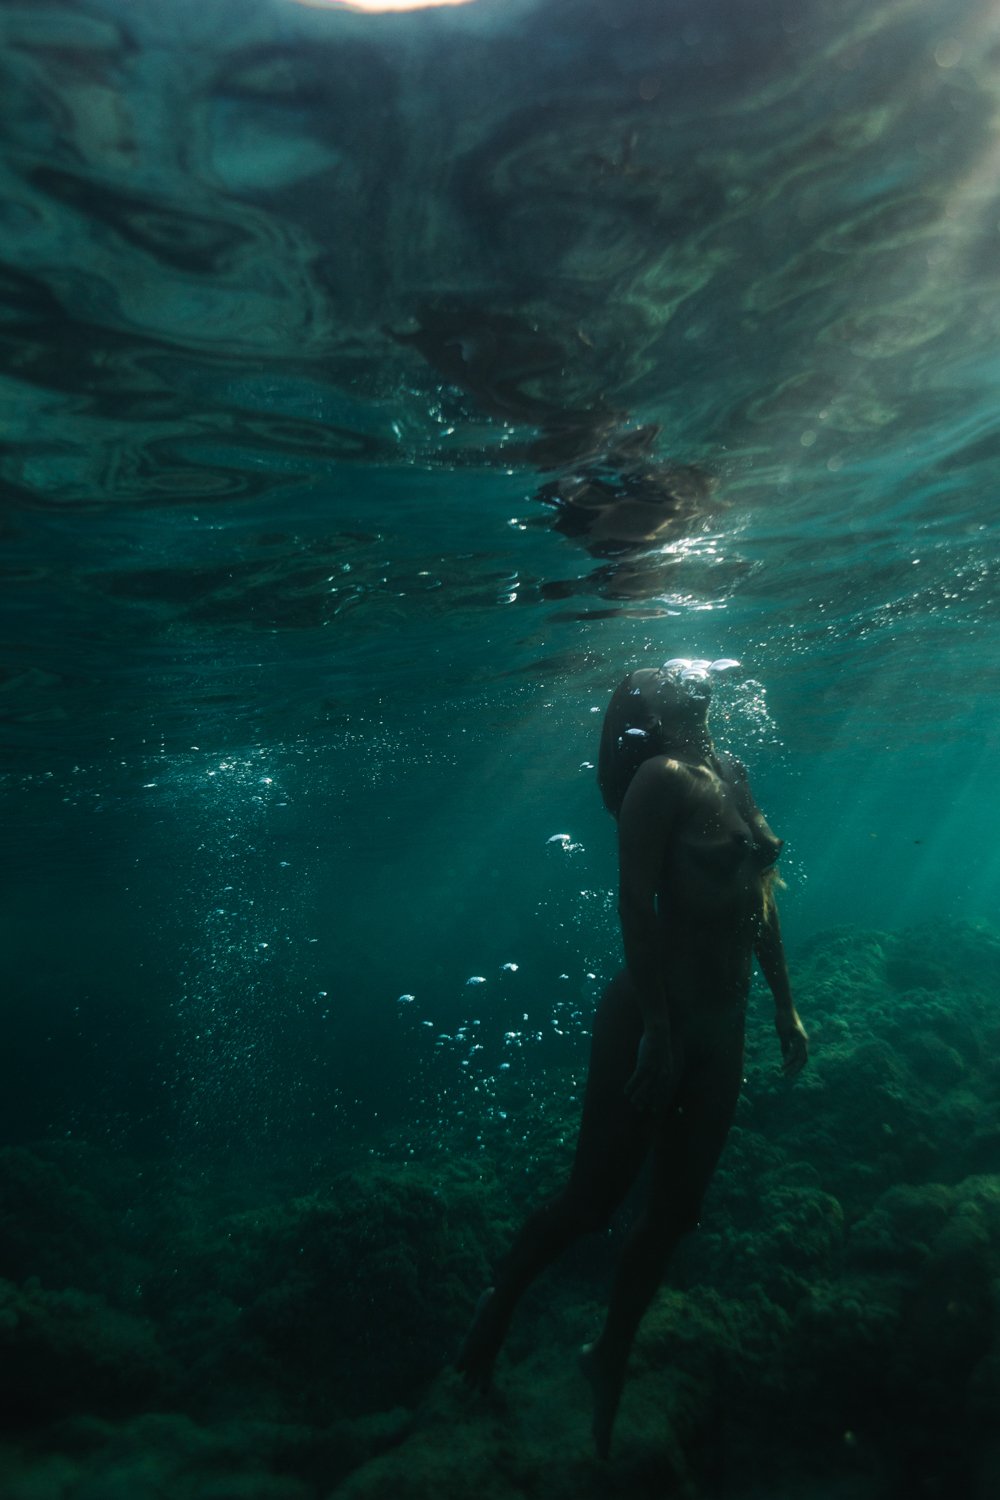 siren sirens corse corsica underwater photography photographe sous leau mermaid femme woman women nude nue fine art photography Krista Espino ajaccio sea Mediterranean france travel-14.jpg